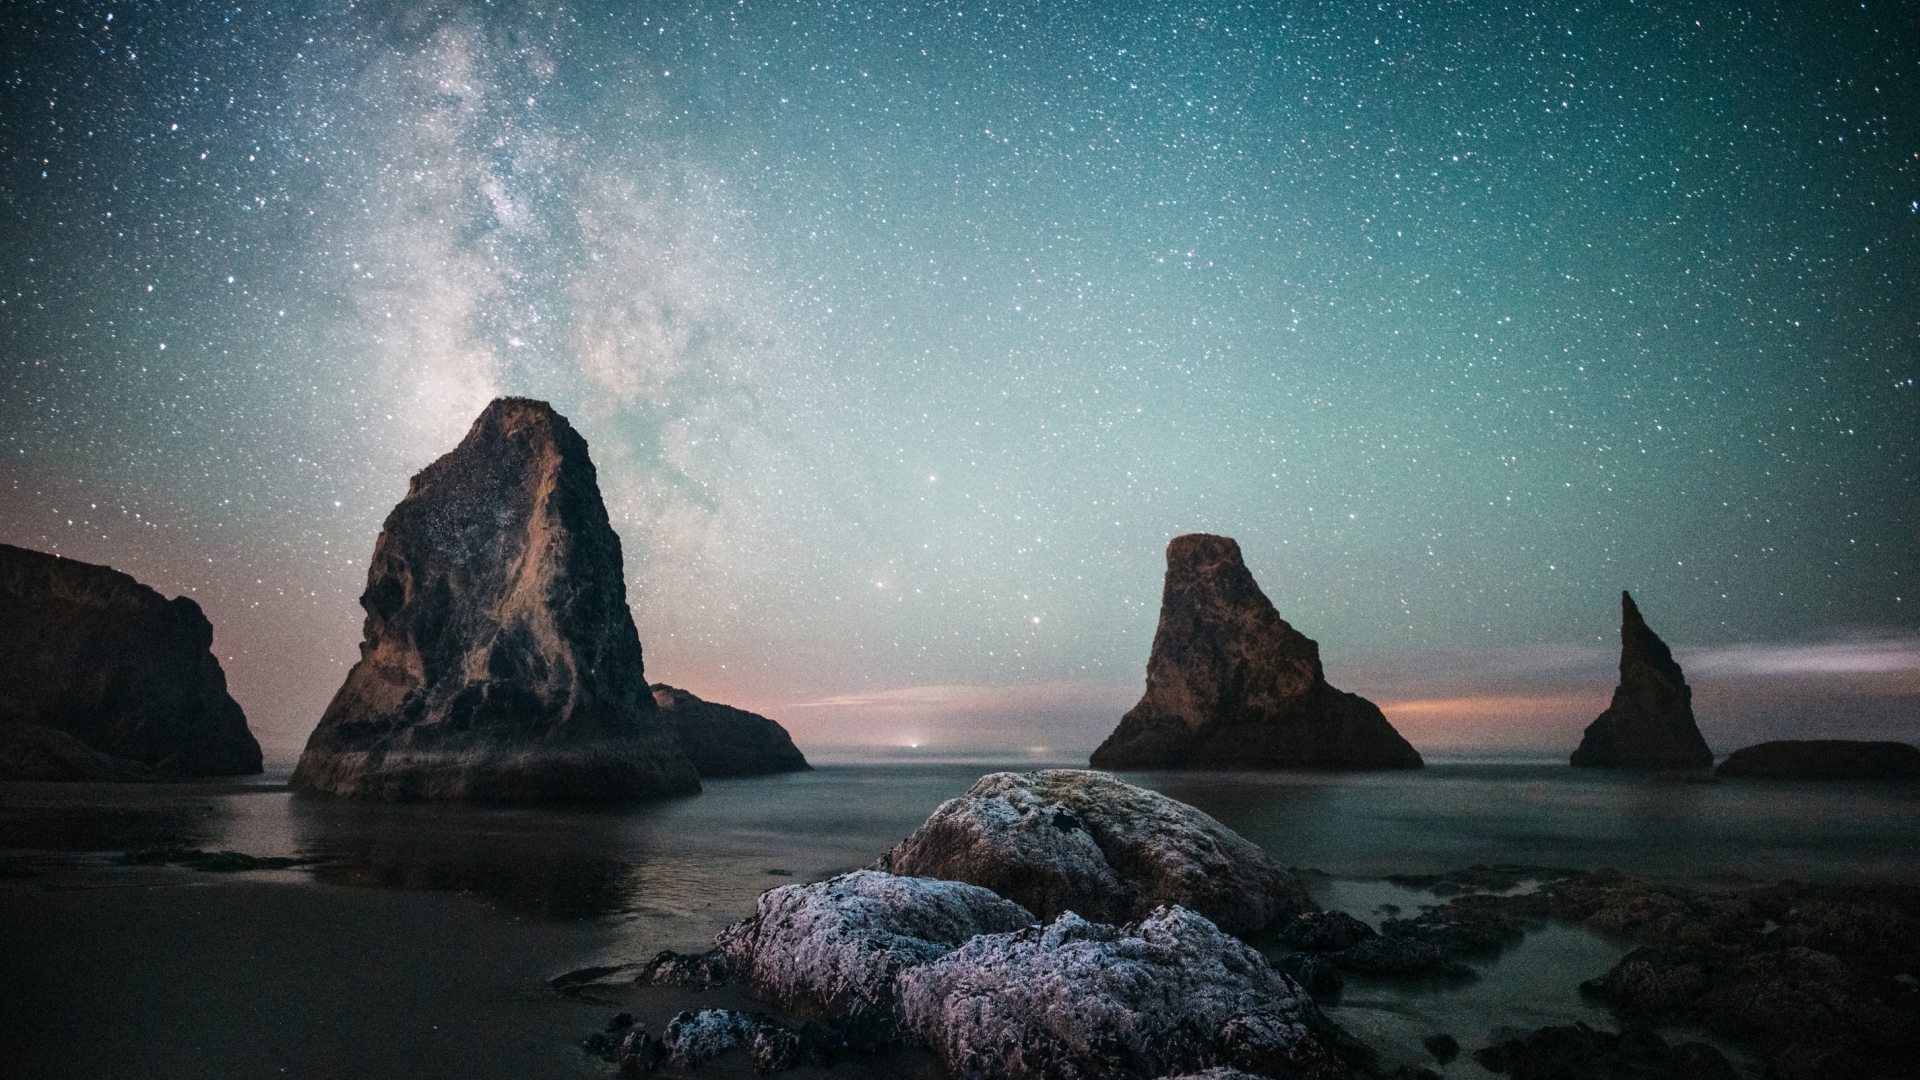 Starry night skies over the jutting rocks of Oregon Islands National Wildlife Refuge